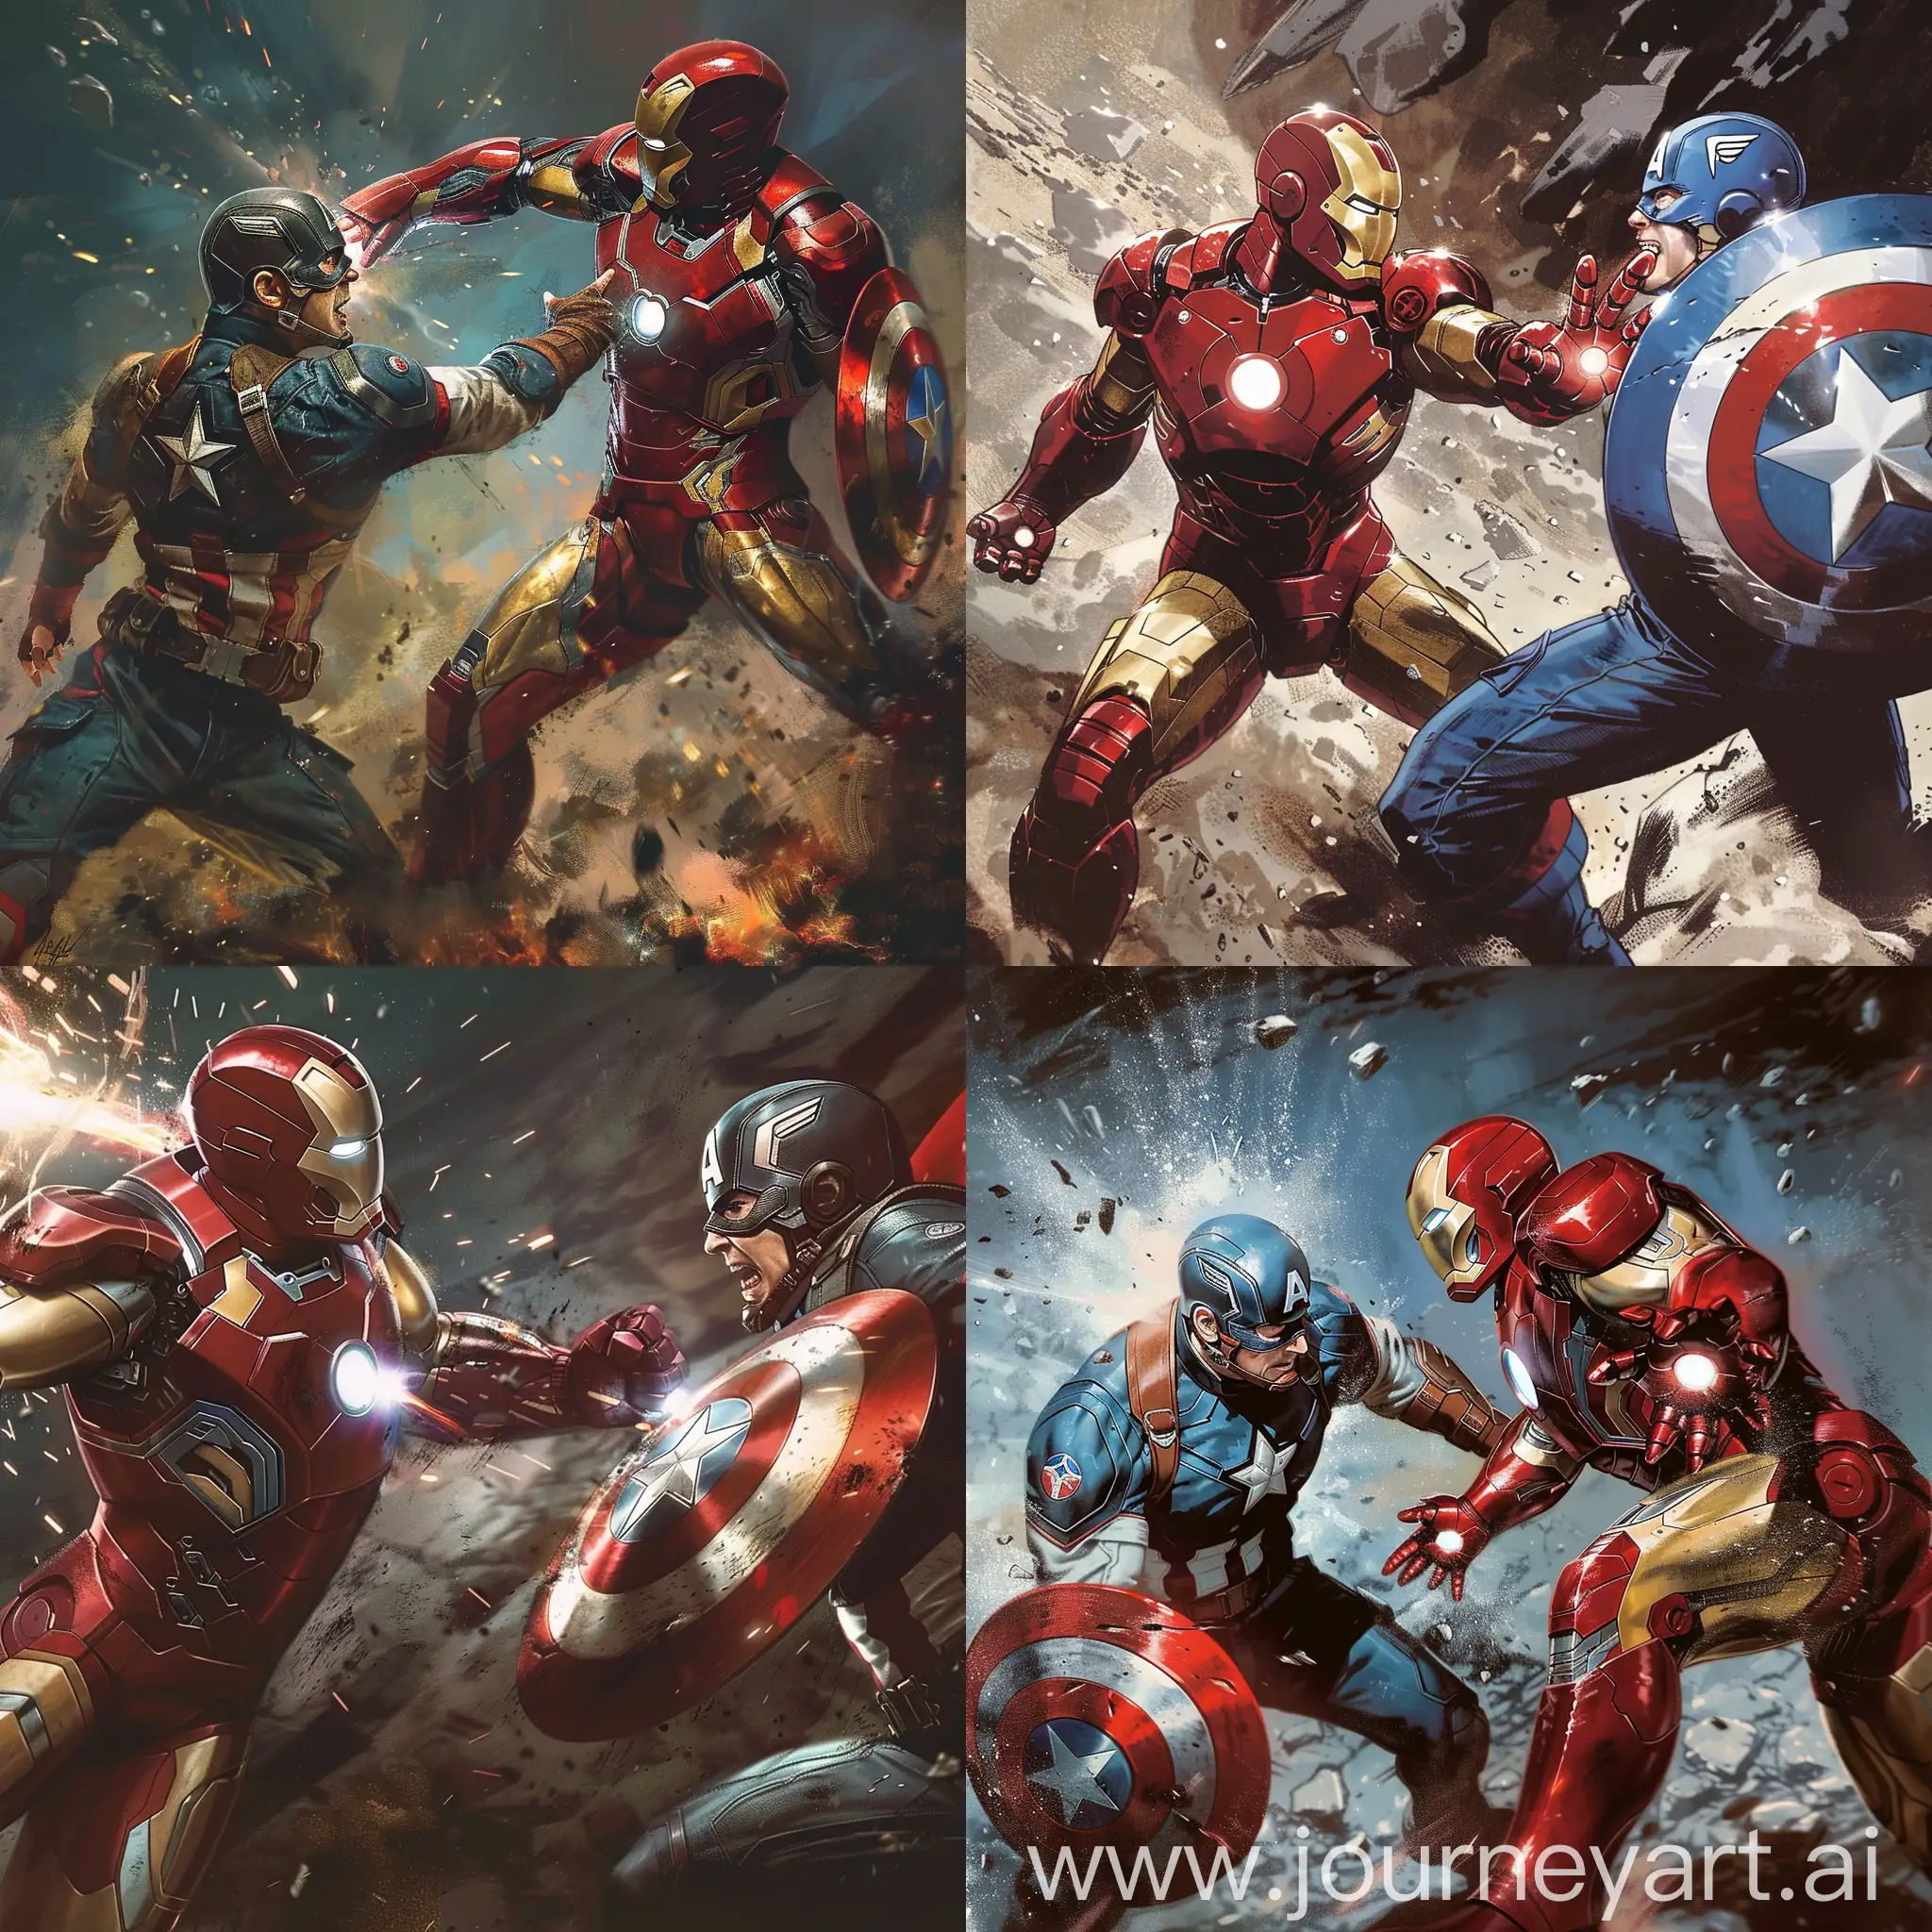 Robert Downey Jr.'s Iron Man fighting Captain America